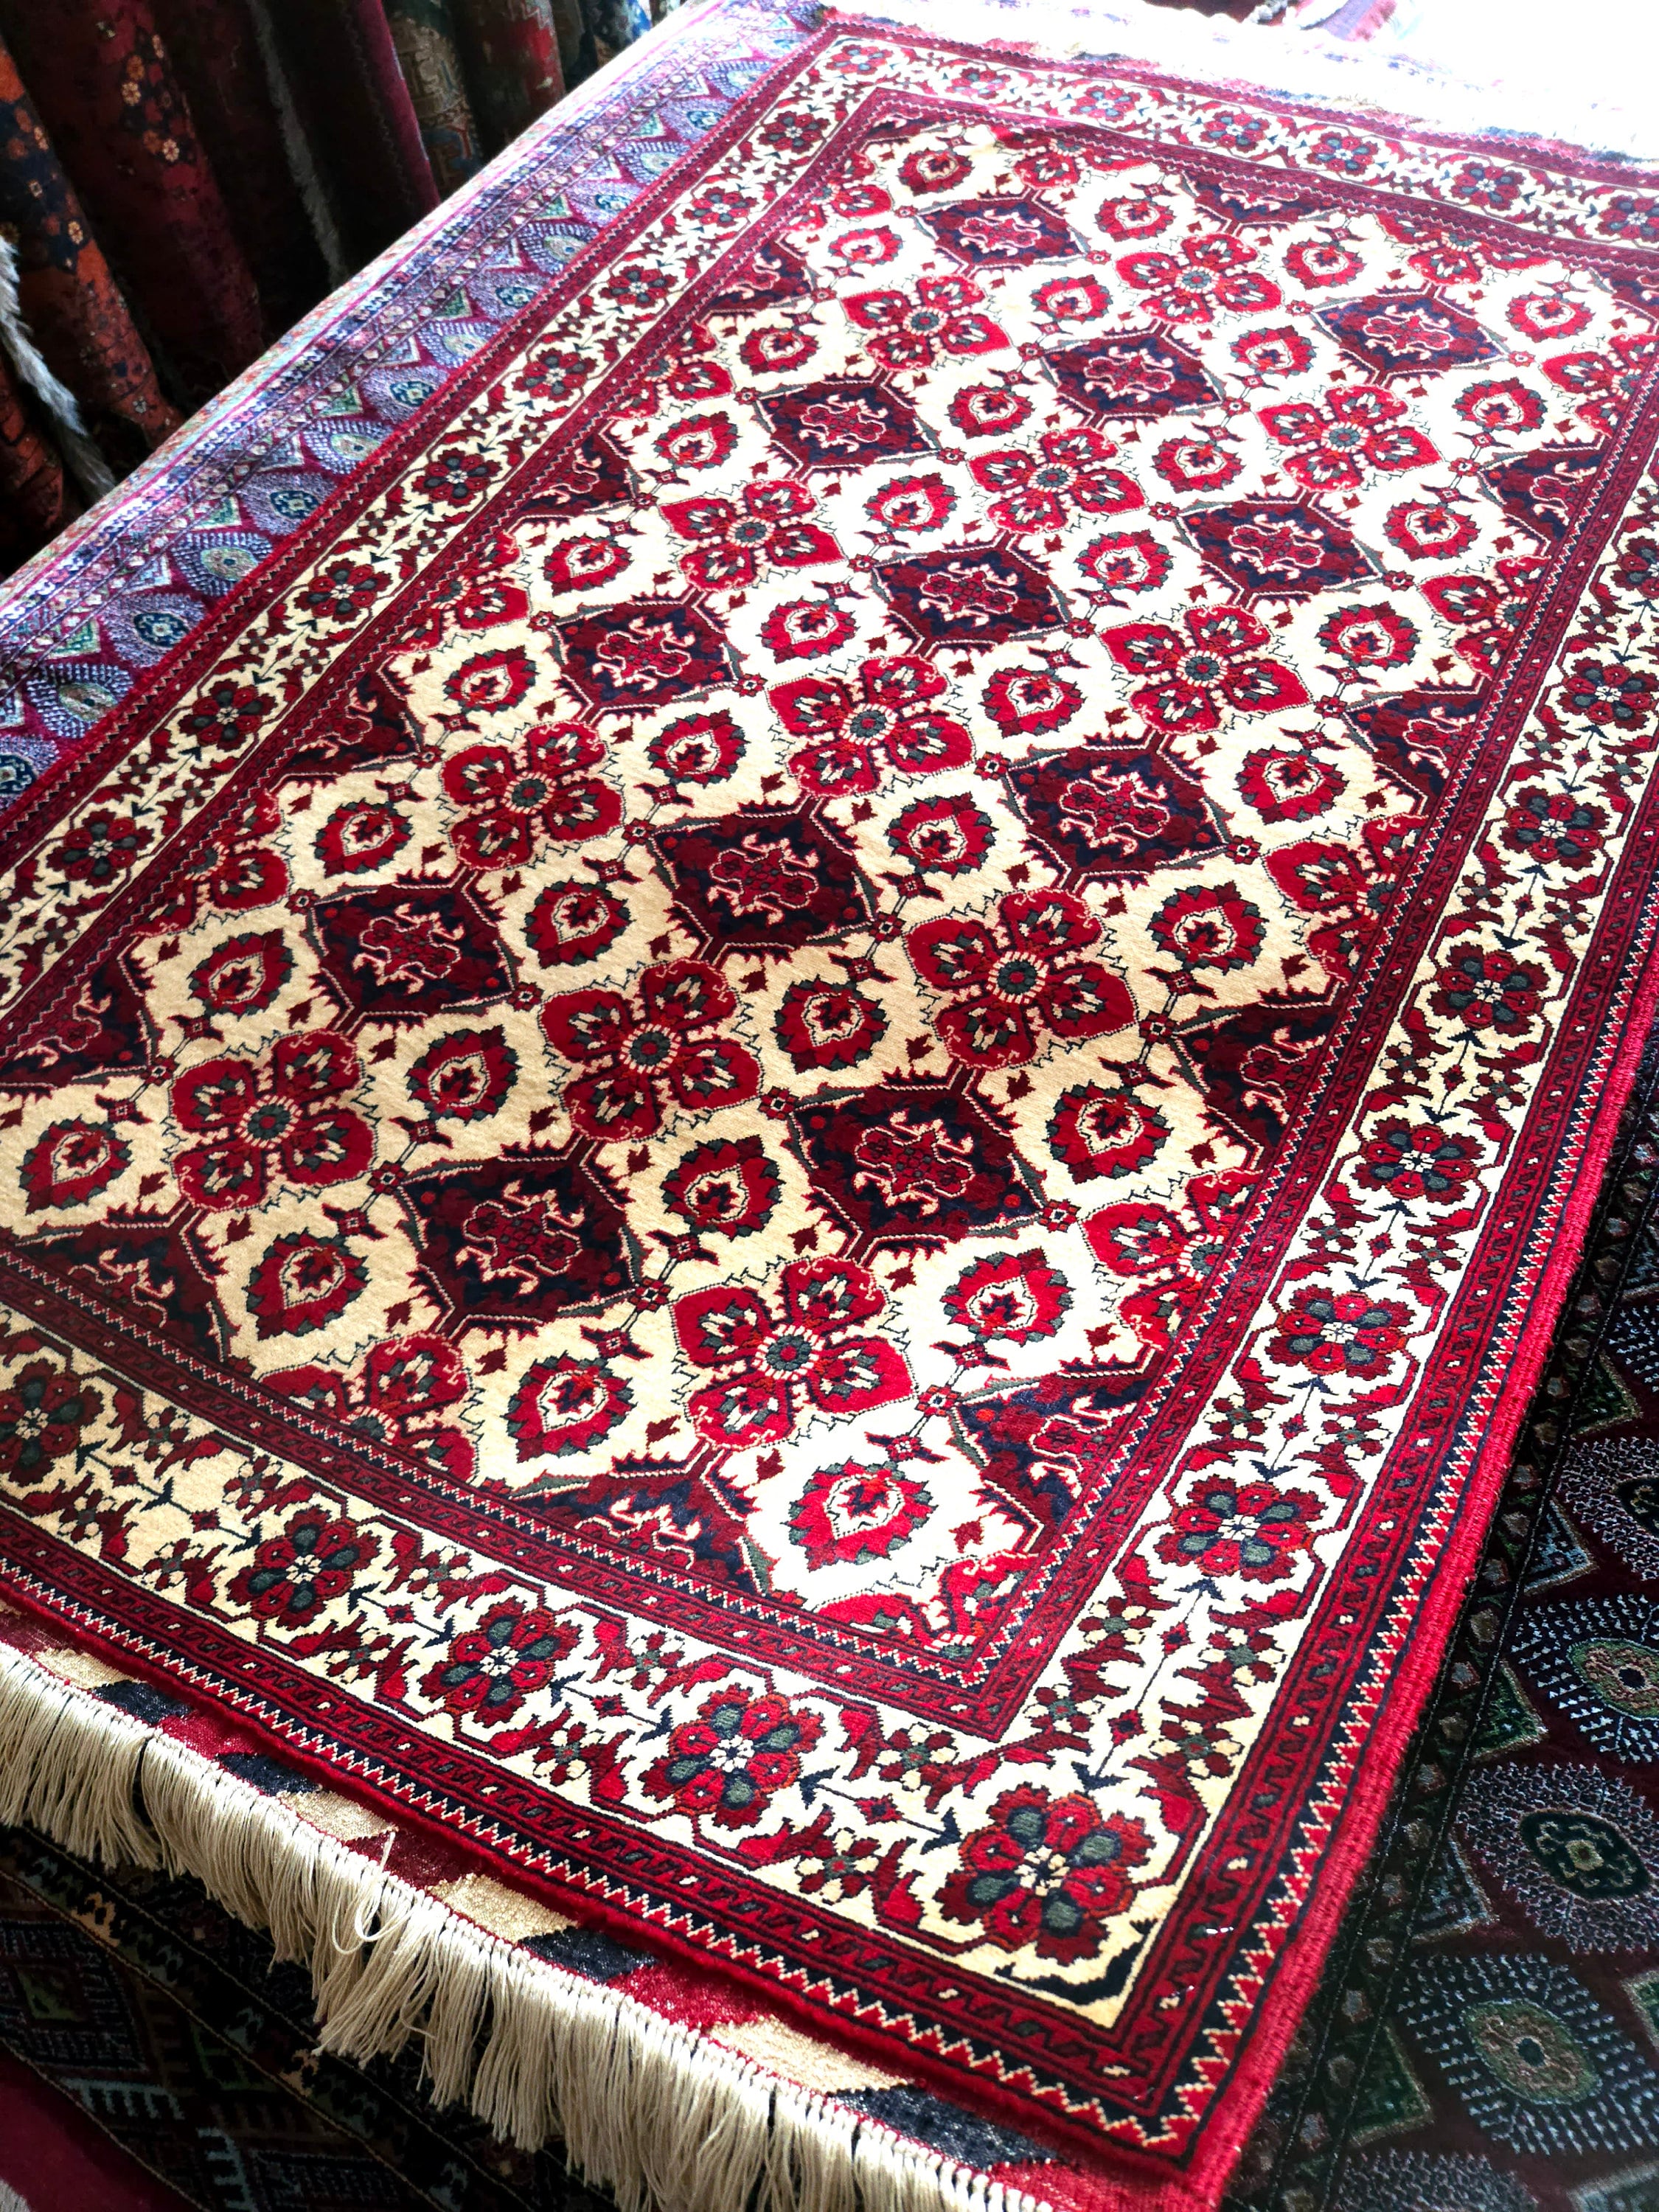 Authentic Area Afghan / Persian Handmade 4x6, sumak rug, girlfriend, blanket, hooked rug large, manta patron, pillow, cool rug, exclusive